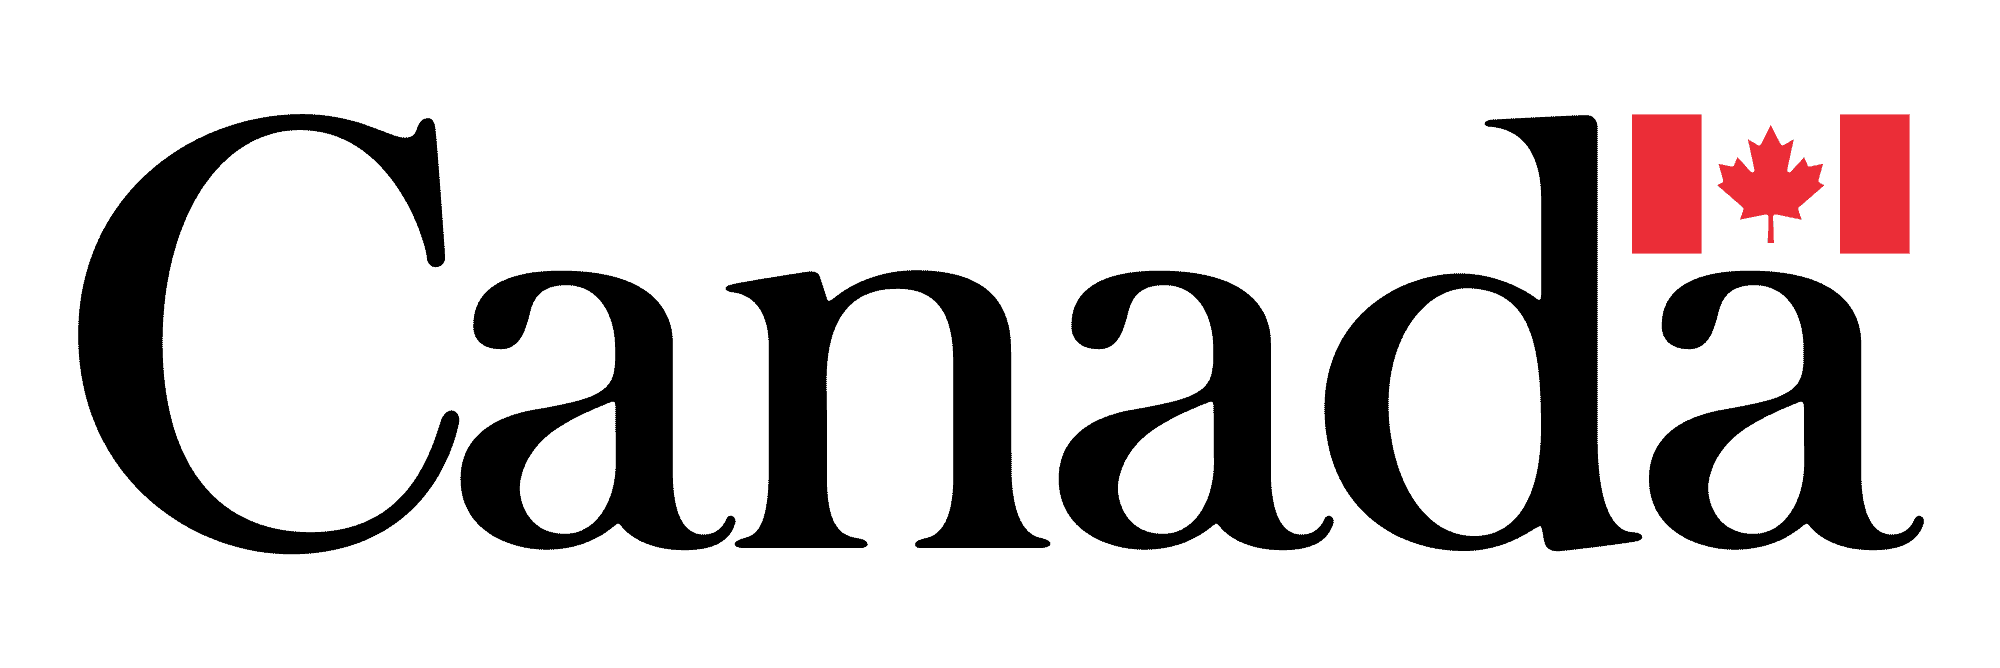 Black and White Canada Wordmark